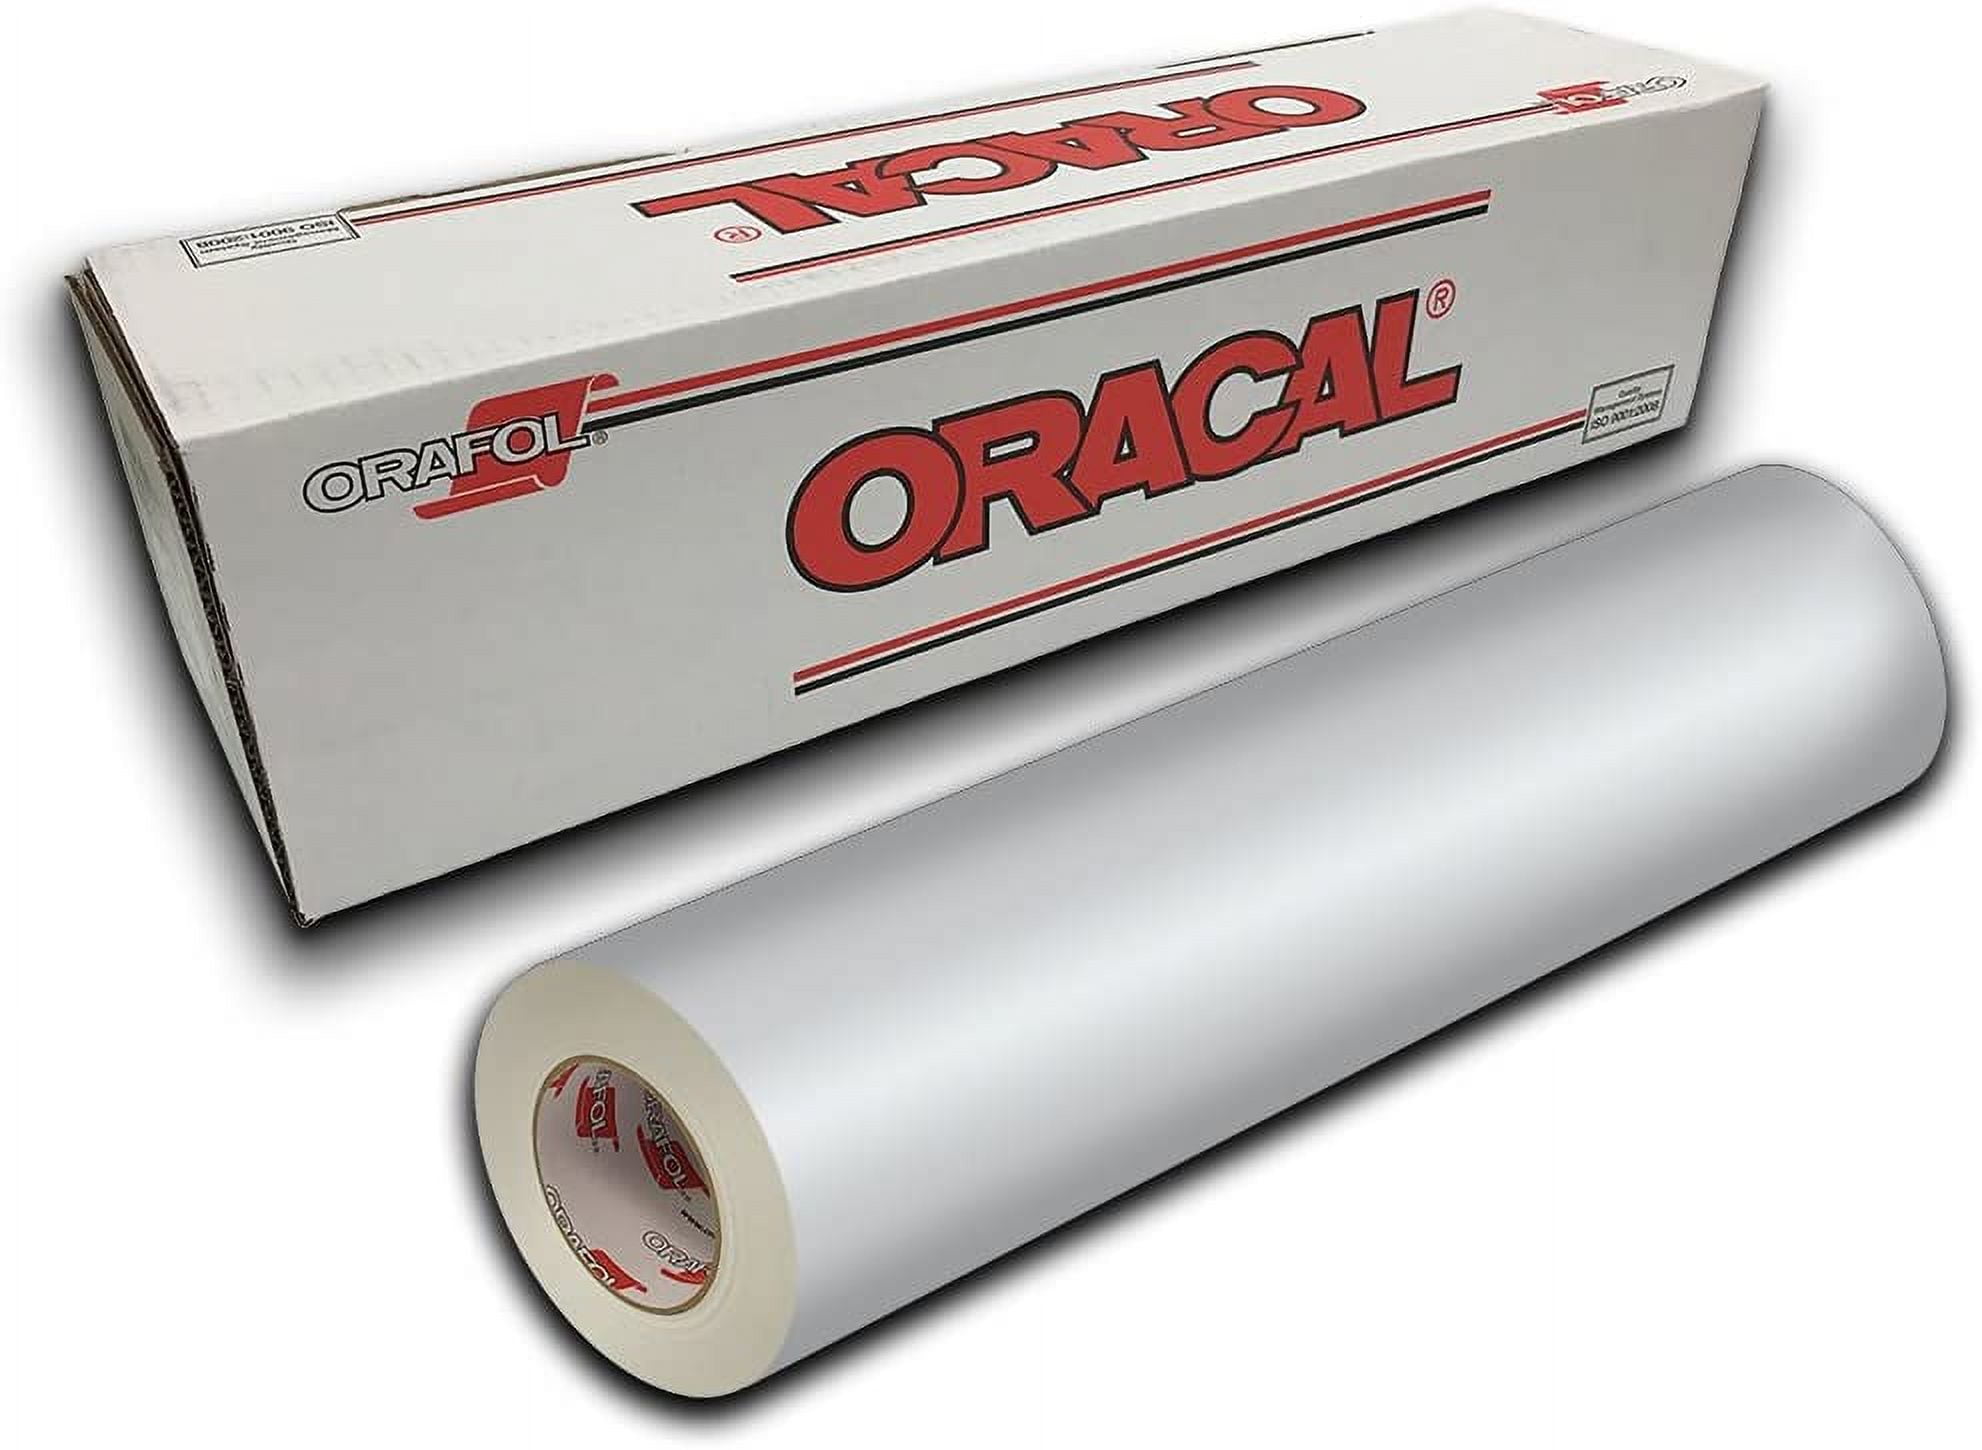 Oracal 651 12x5FT Rolls